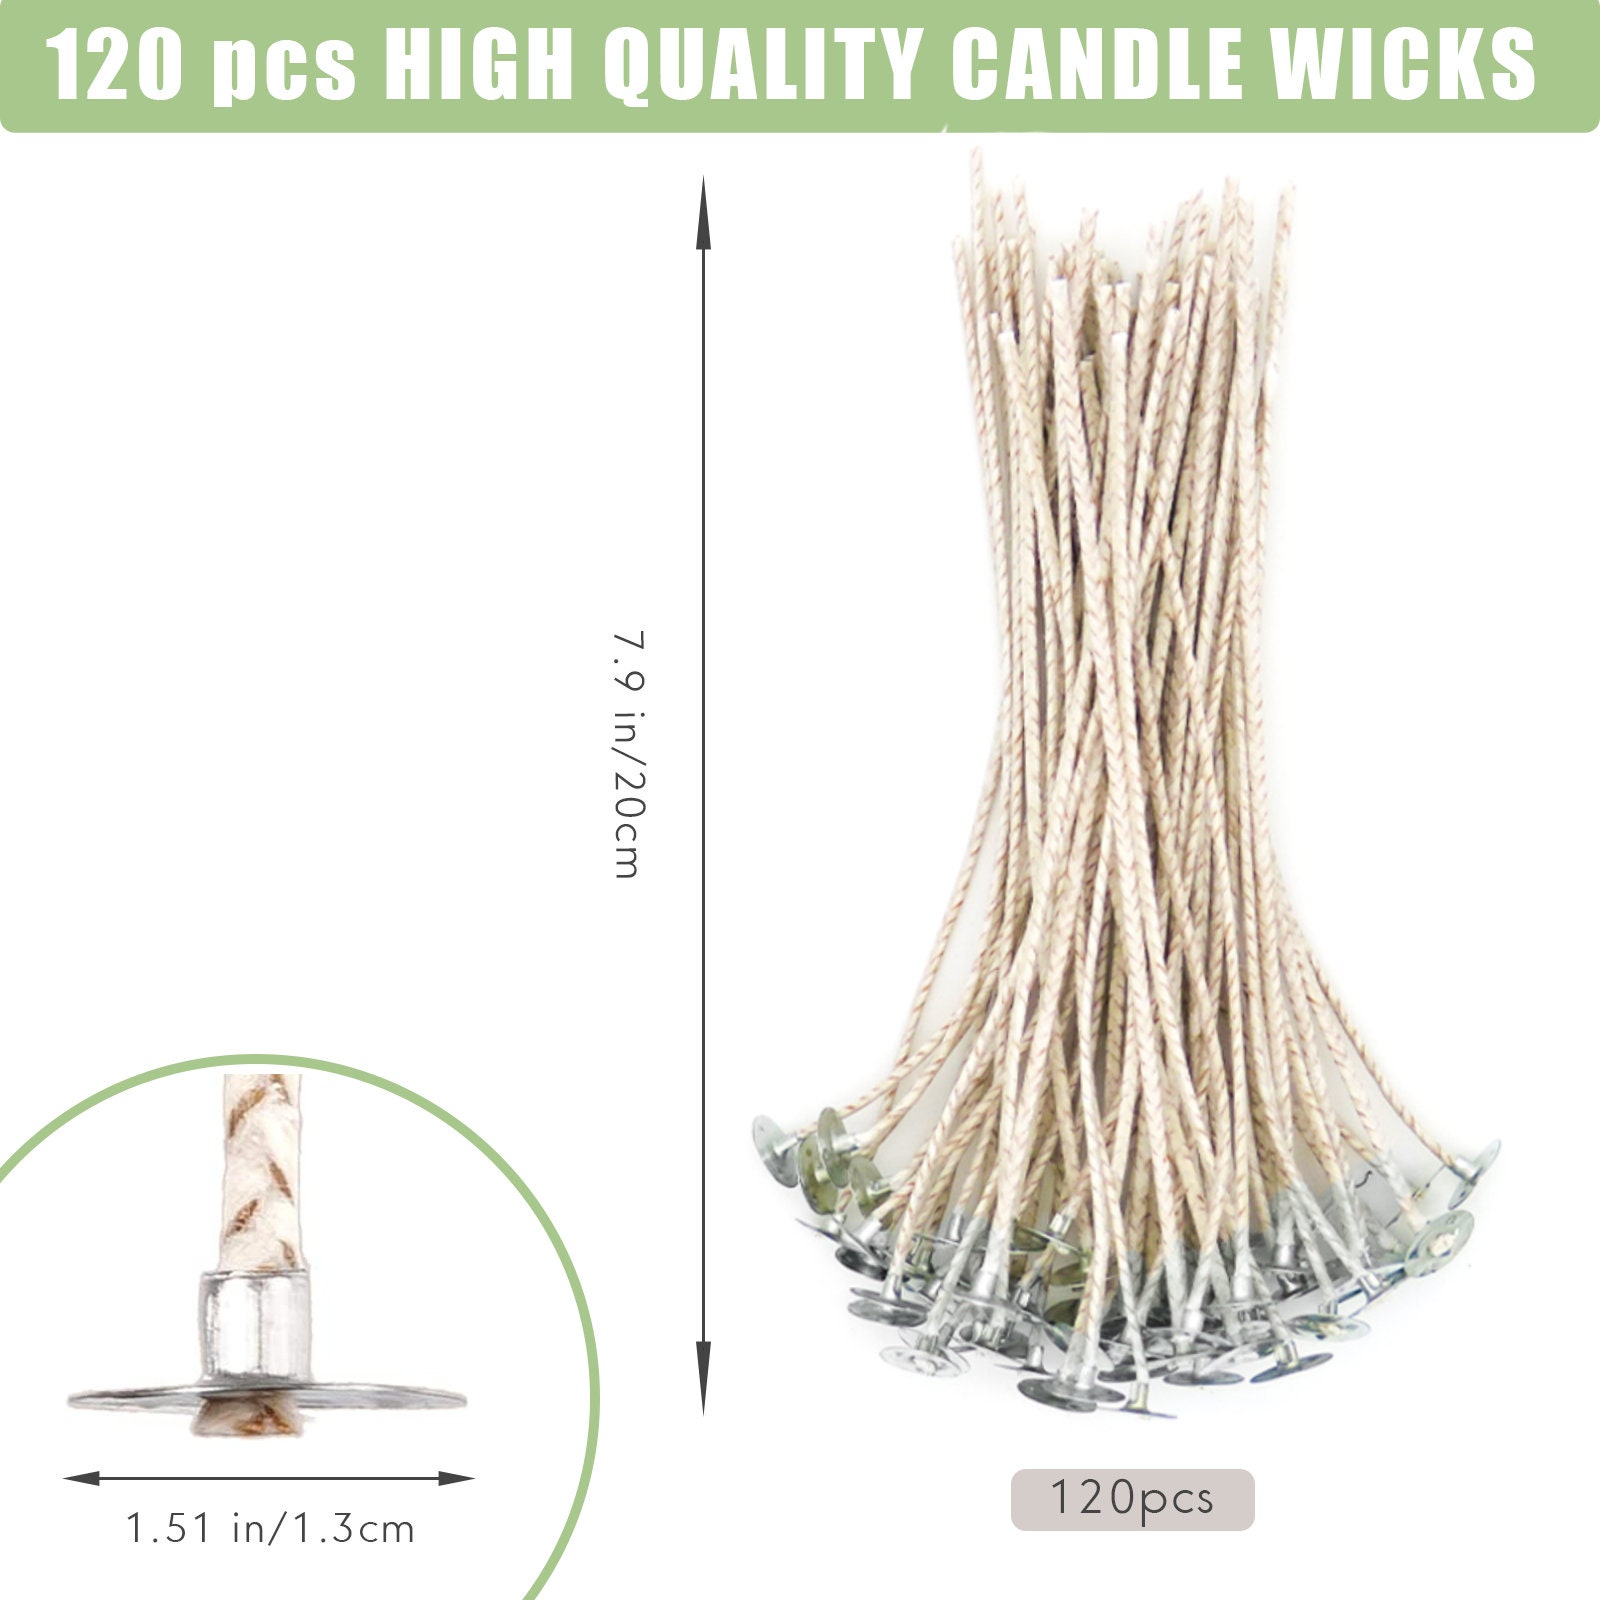 KOOLPUG Candle Wicks, 120 Pcs Organic Soy Pre-Waxed 100% Cotton